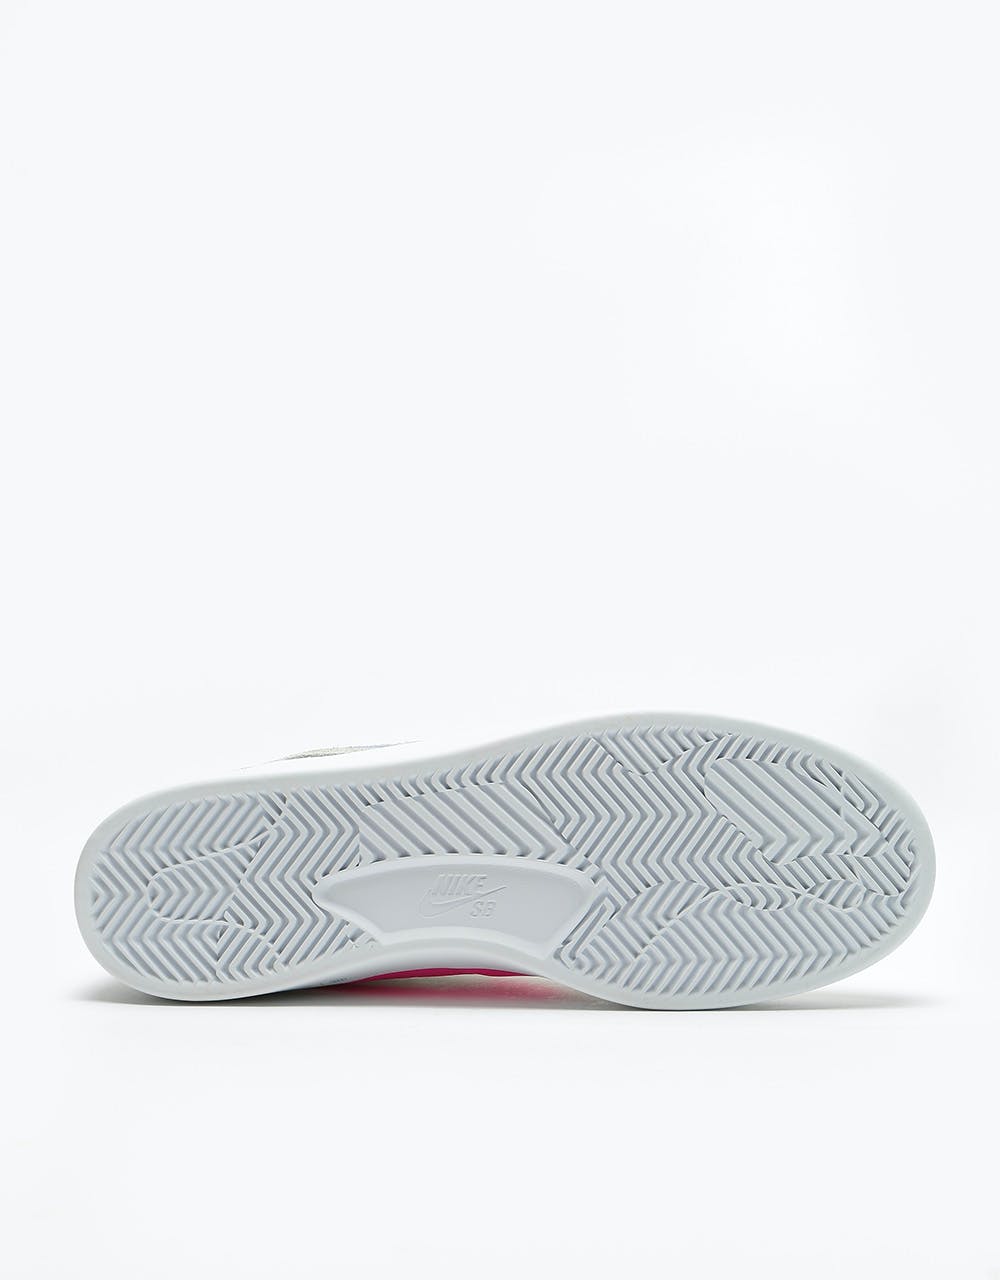 Nike SB Bruin React T Skate Shoes - Summit White/Racer Blue-Pink Blast